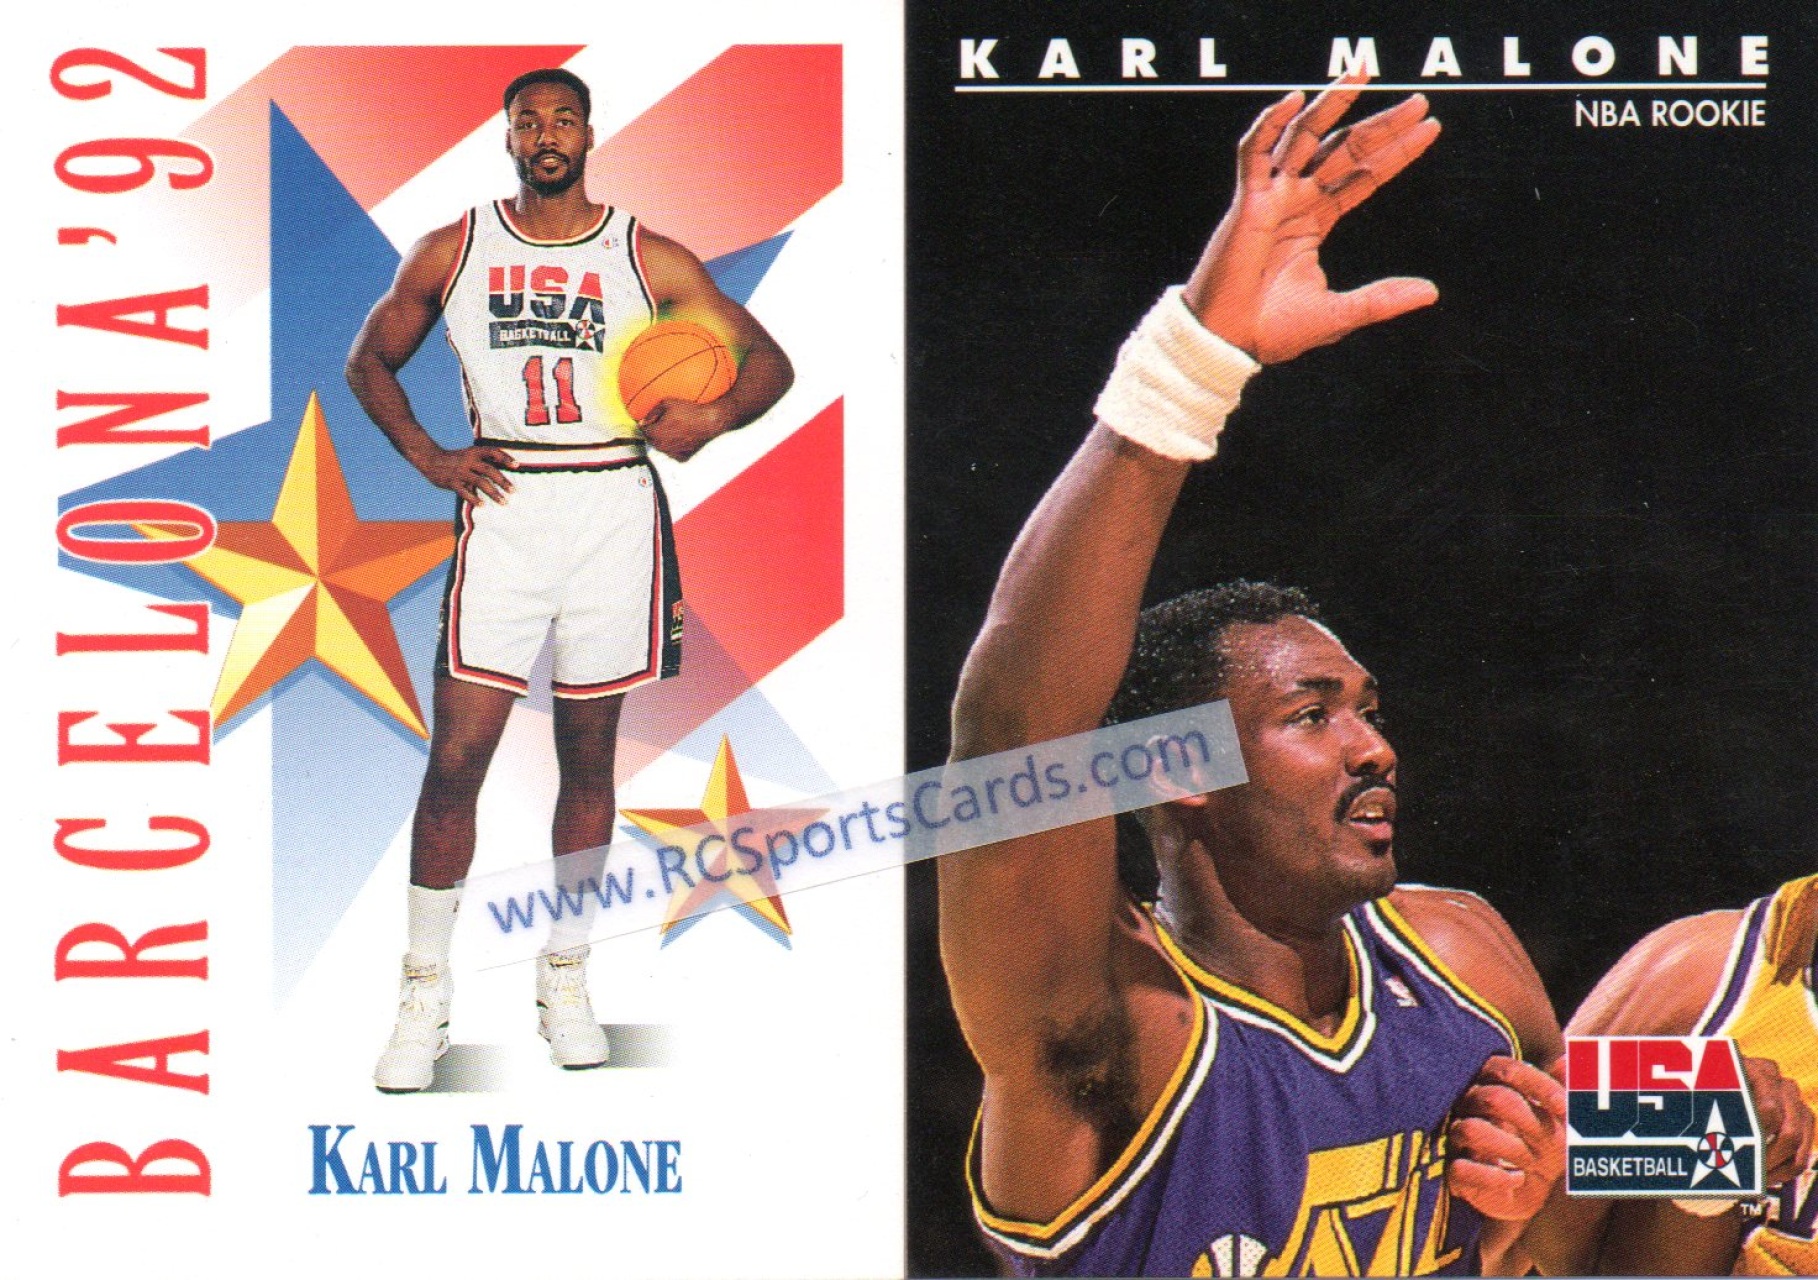 1991 Upper Deck Basketball Card #355 Karl Malone Utah Jazz #F45705